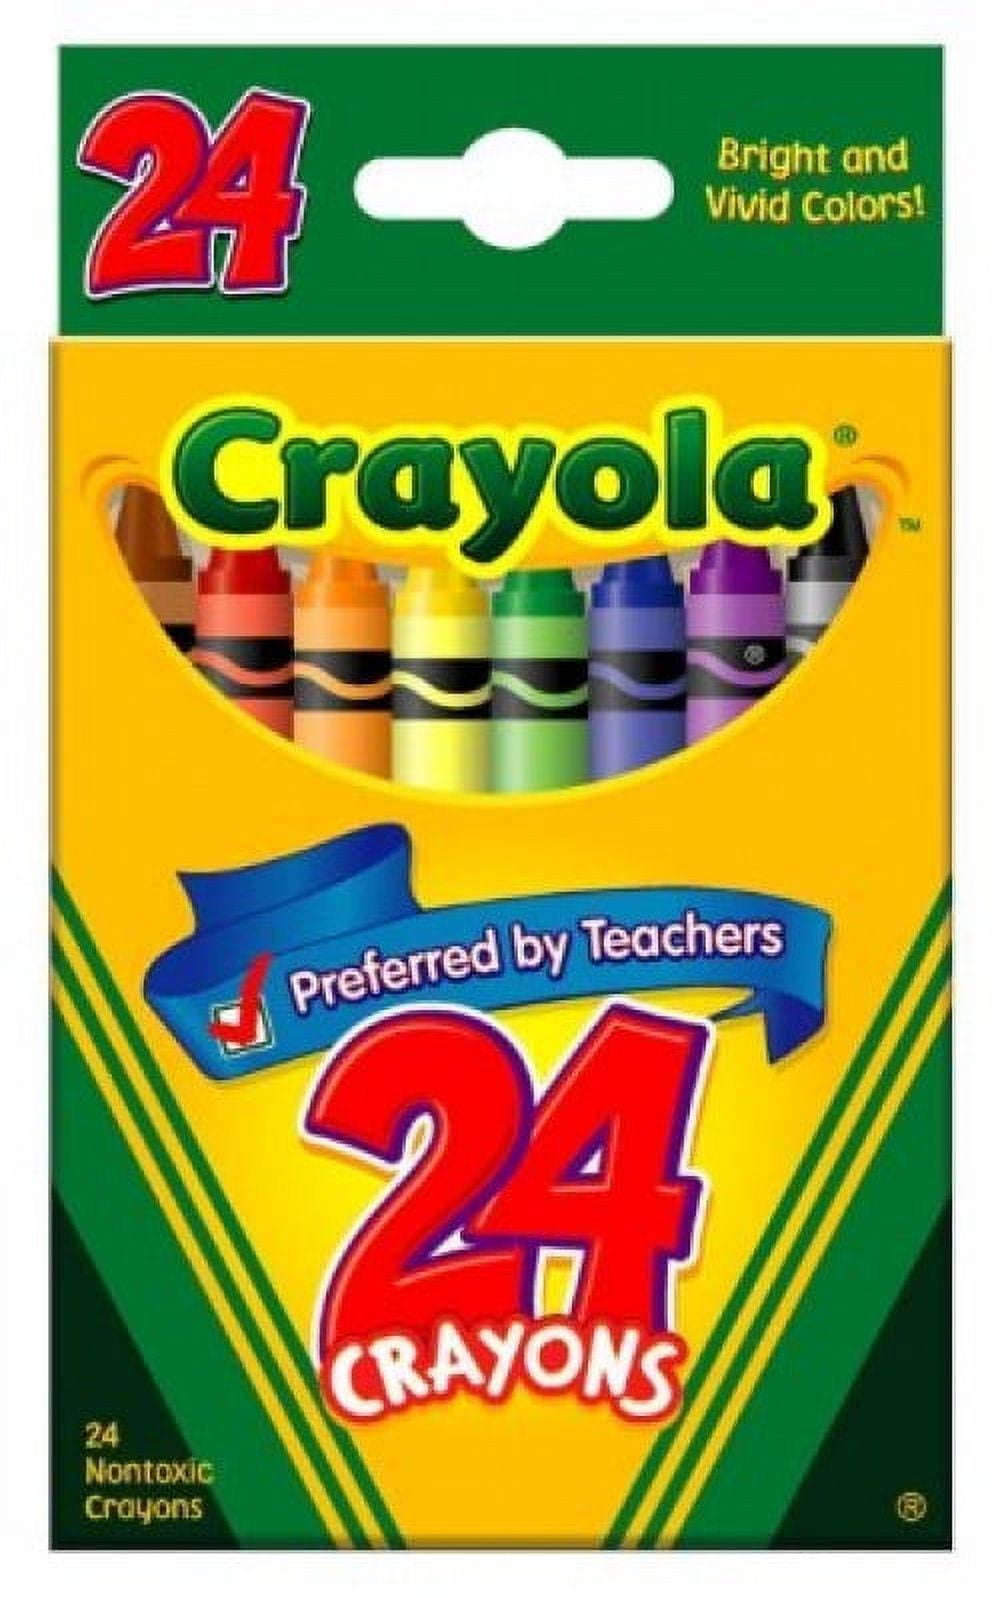 Crayola 24 Count Crayons 6 Pack Bundle Totaling 144 Crayons, Assorted